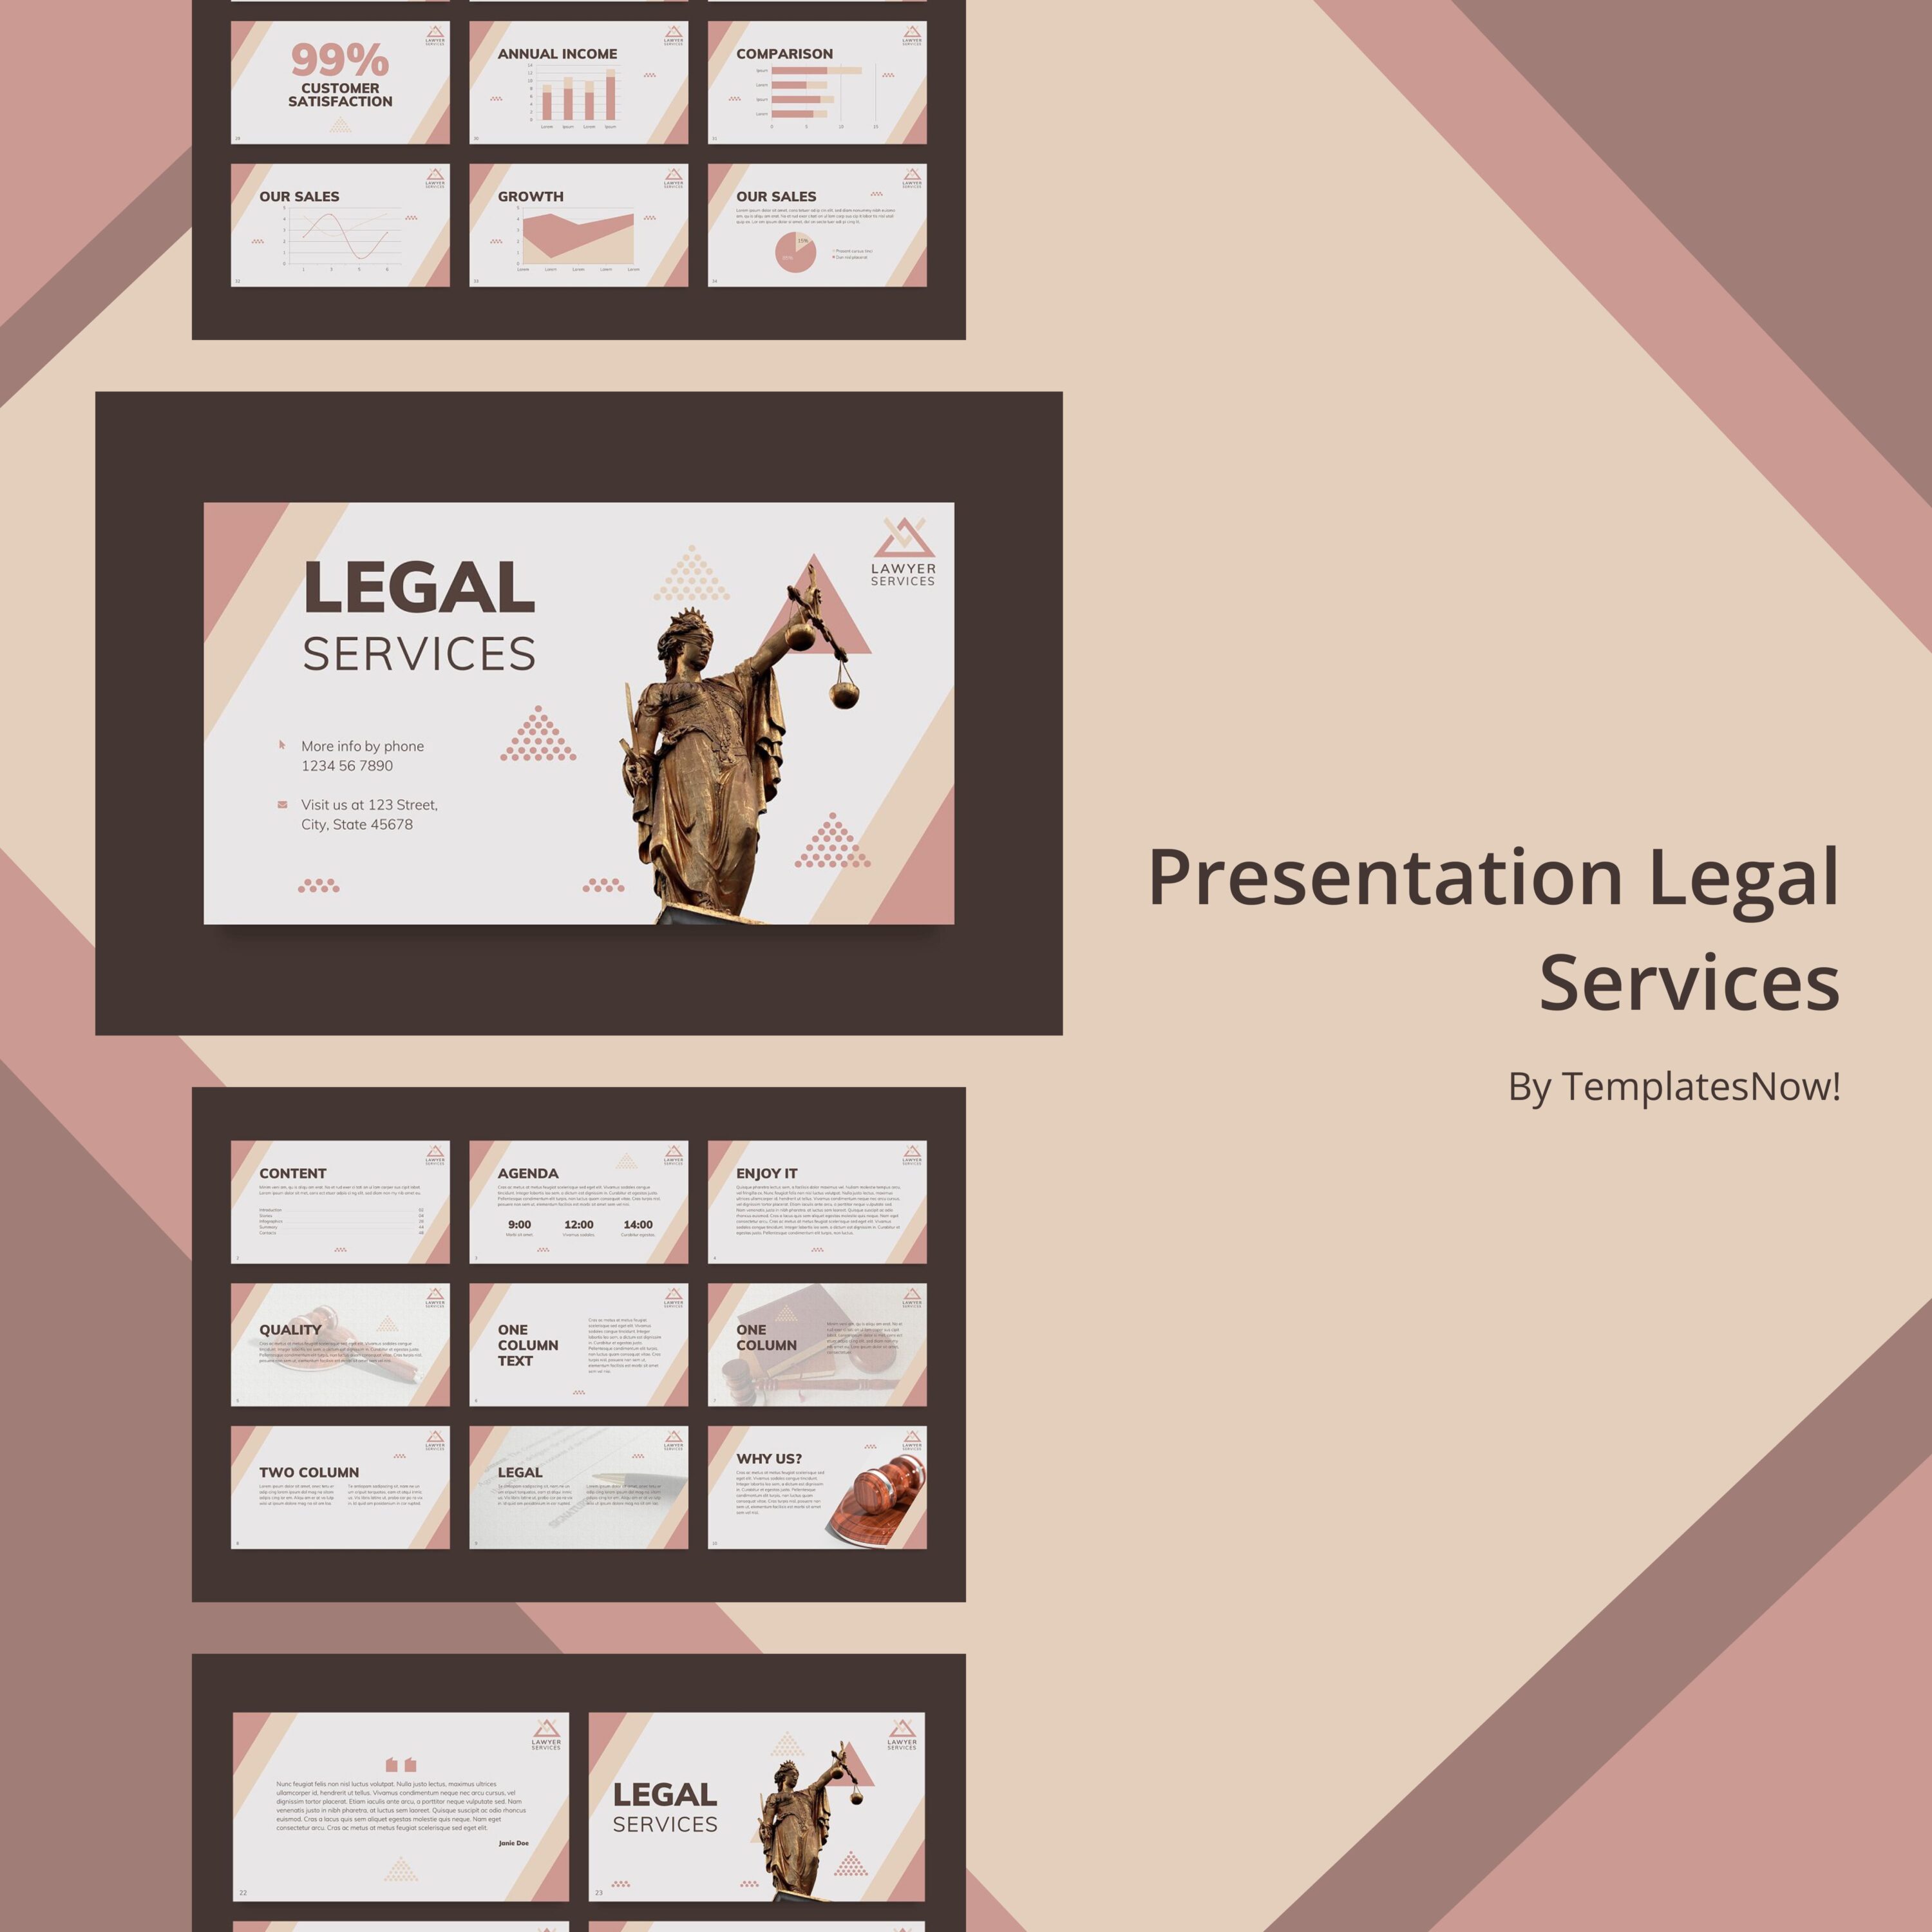 Presentation Legal Services cover.